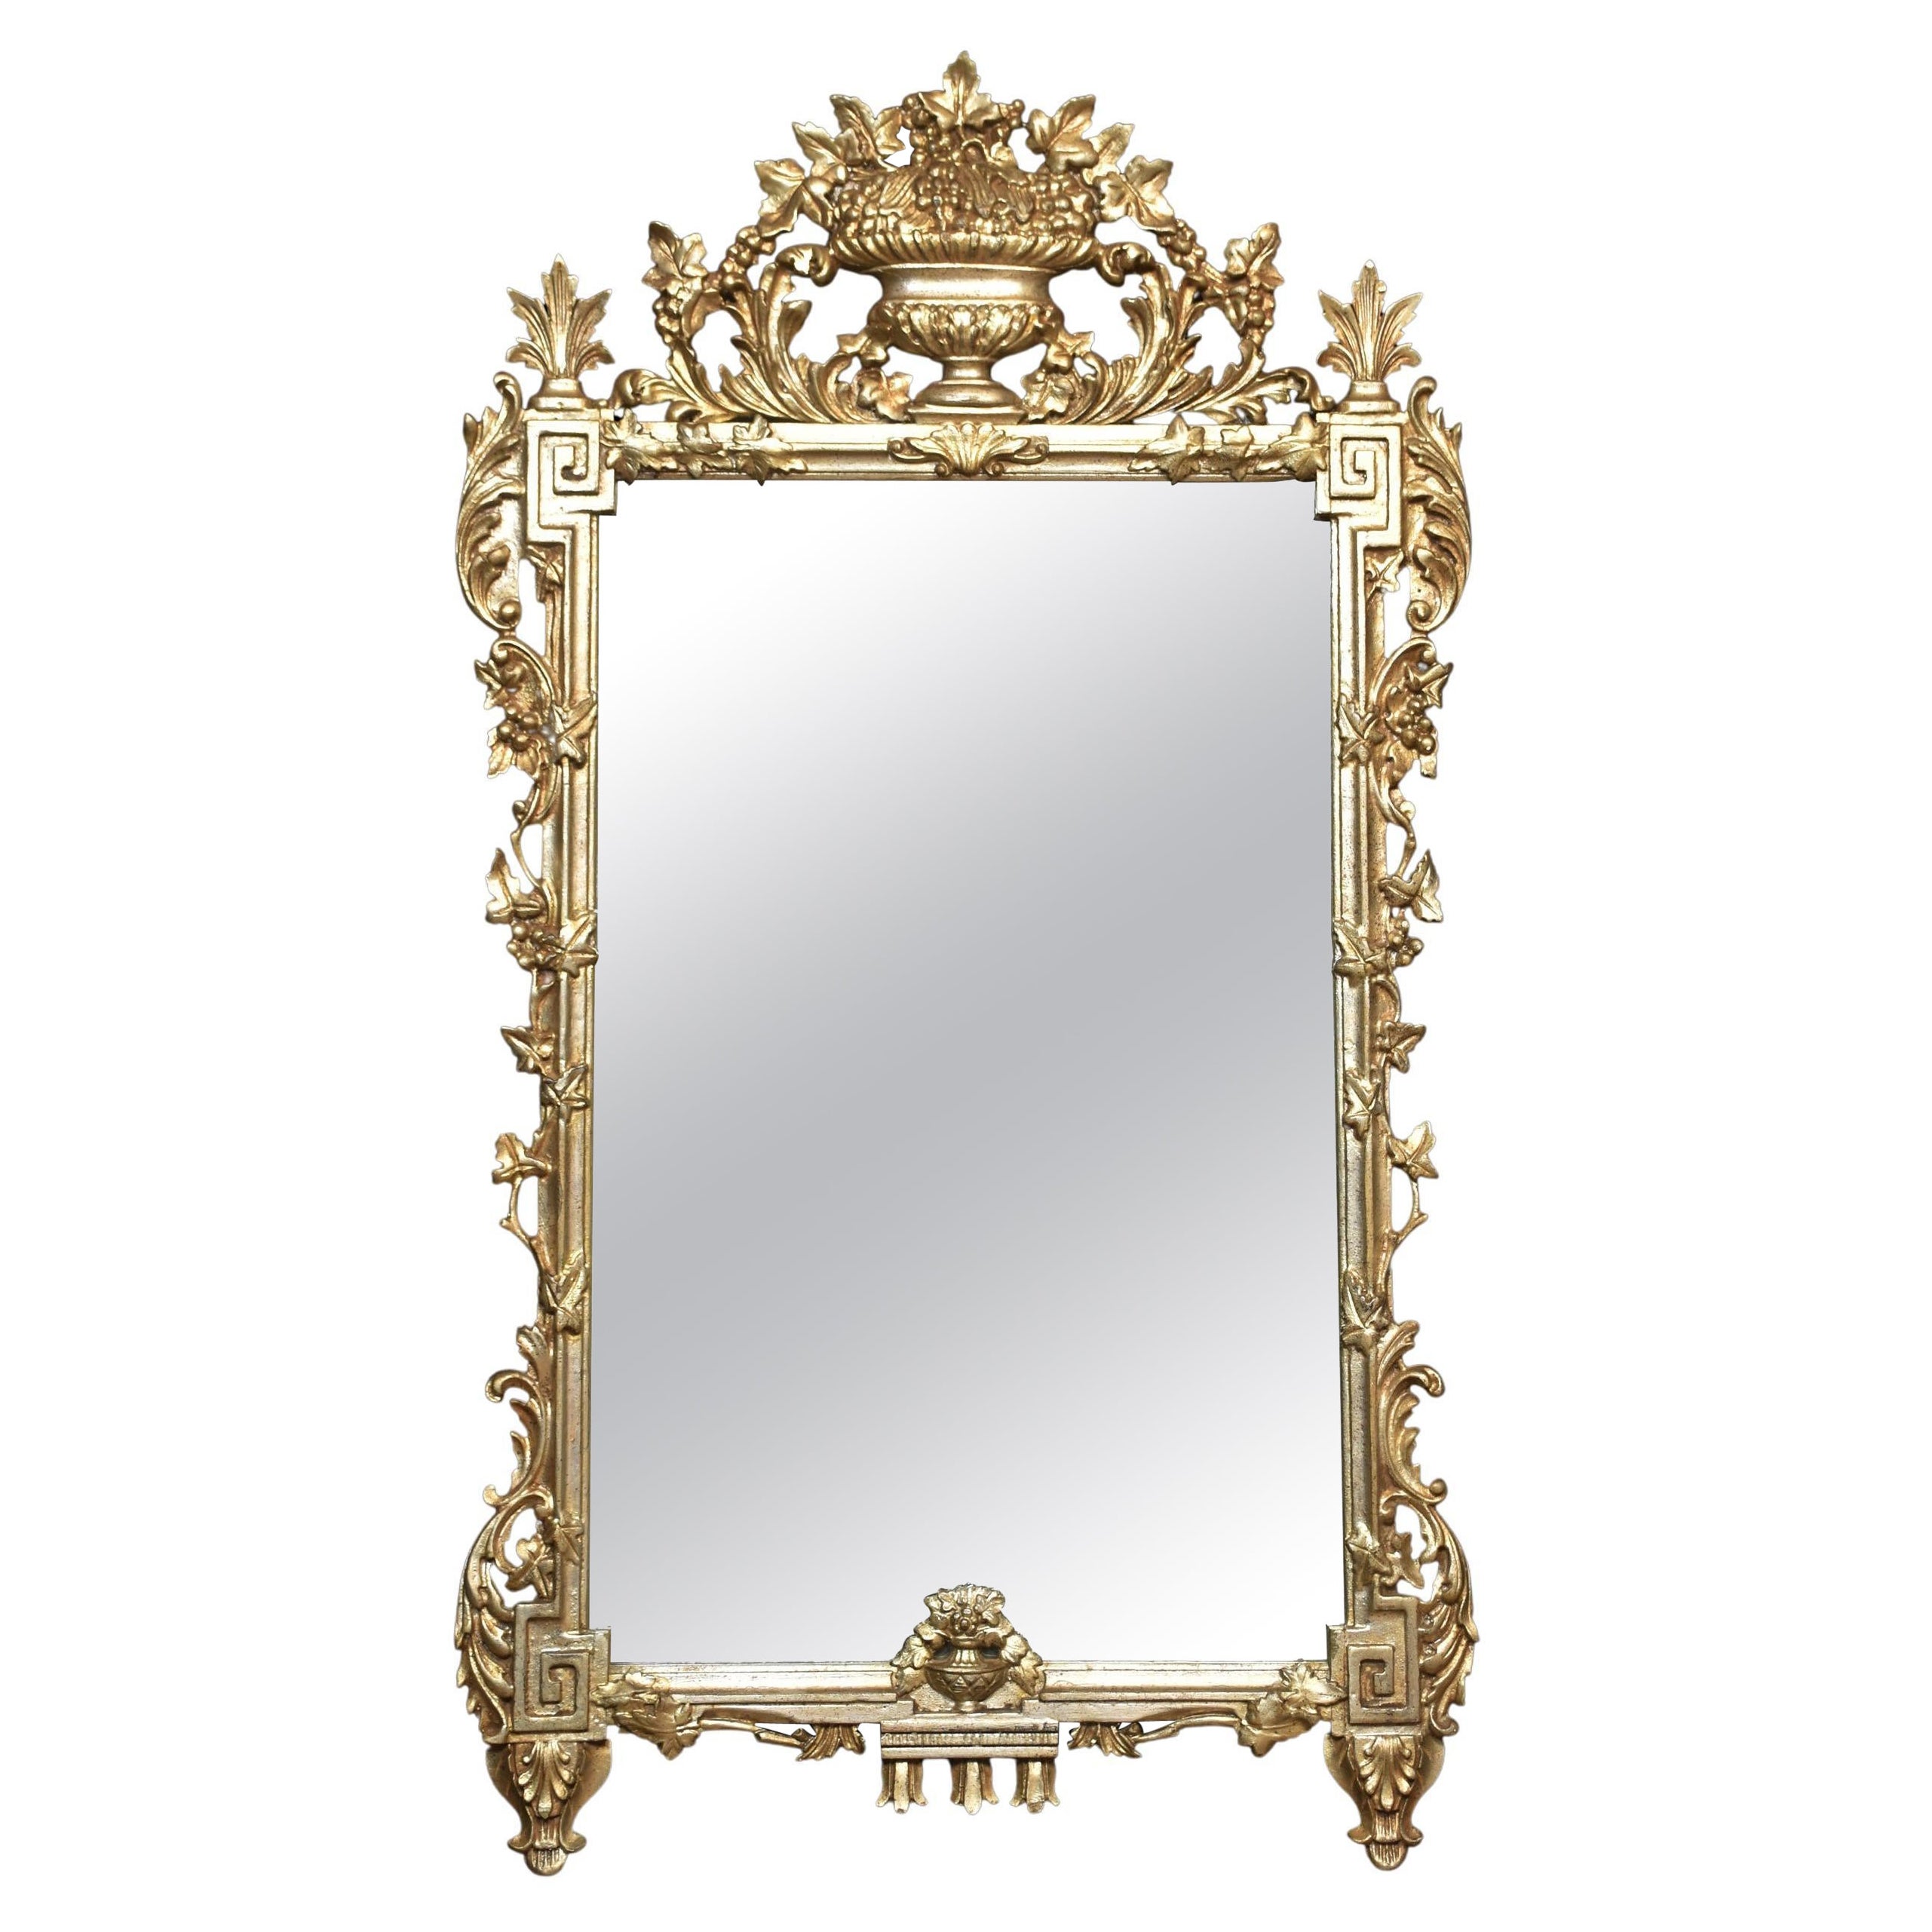 18th Century Venetian-Style Silvered Wall Mirror